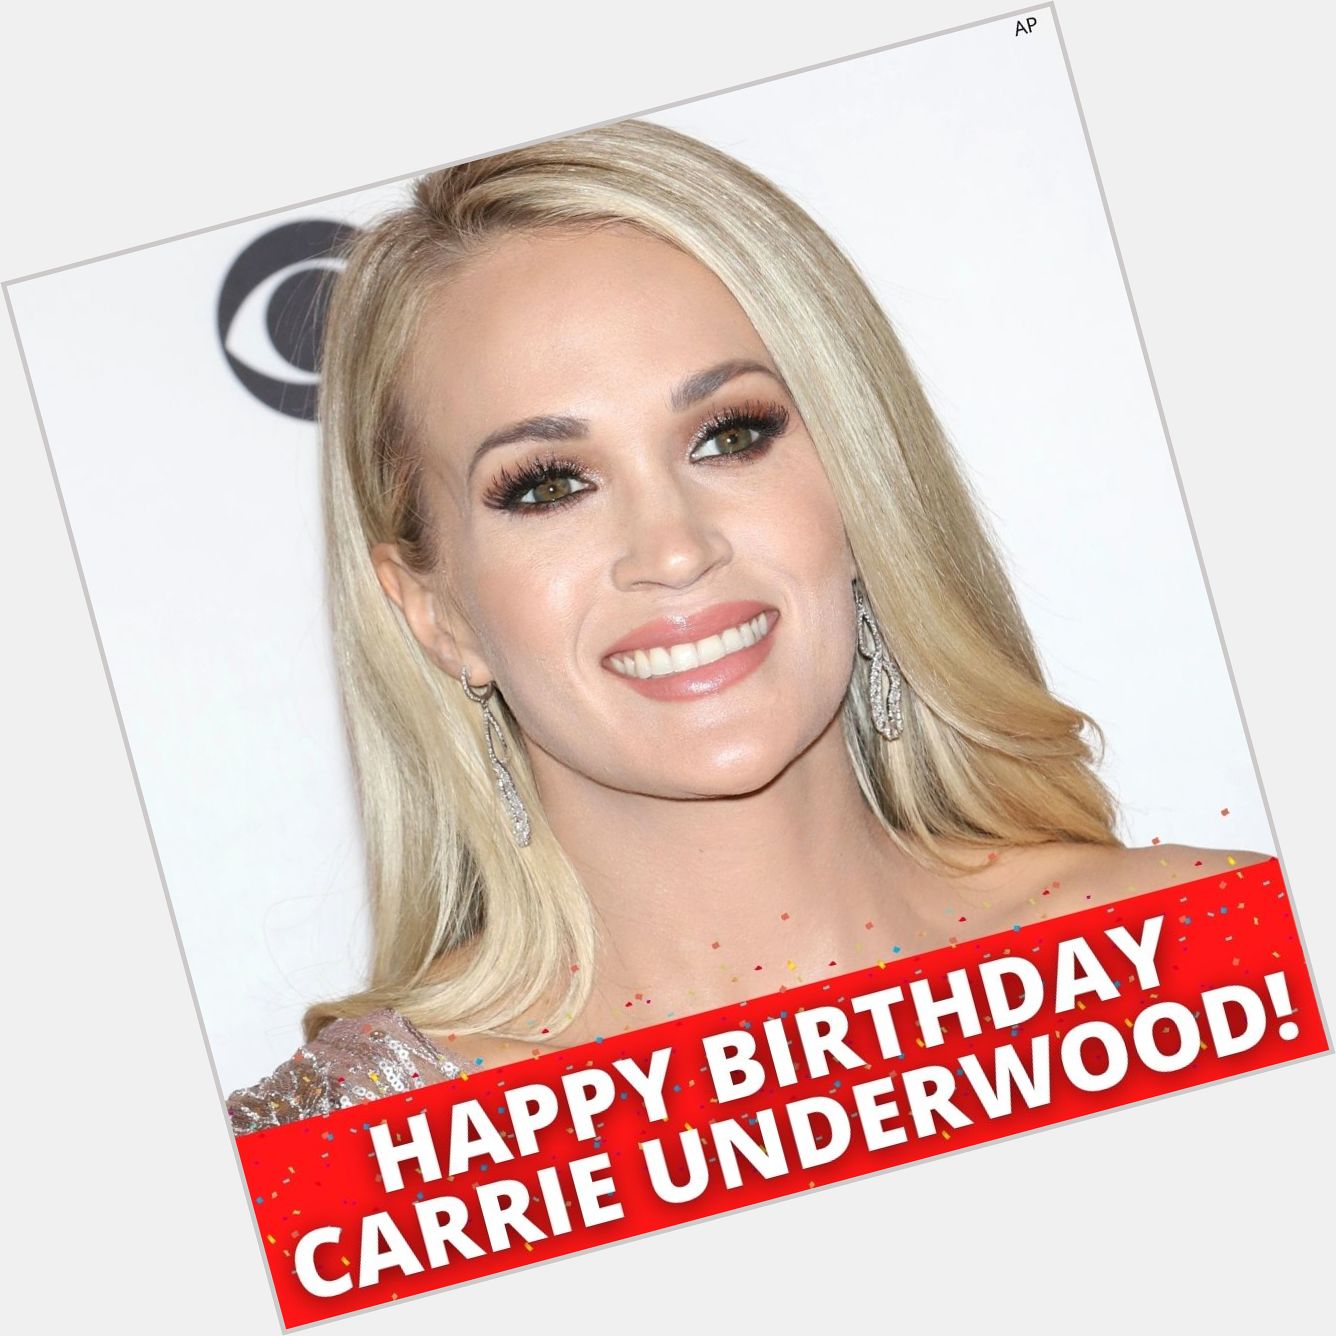 HAPPY BIRTHDAY! Carrie Underwood turns 38 today. 